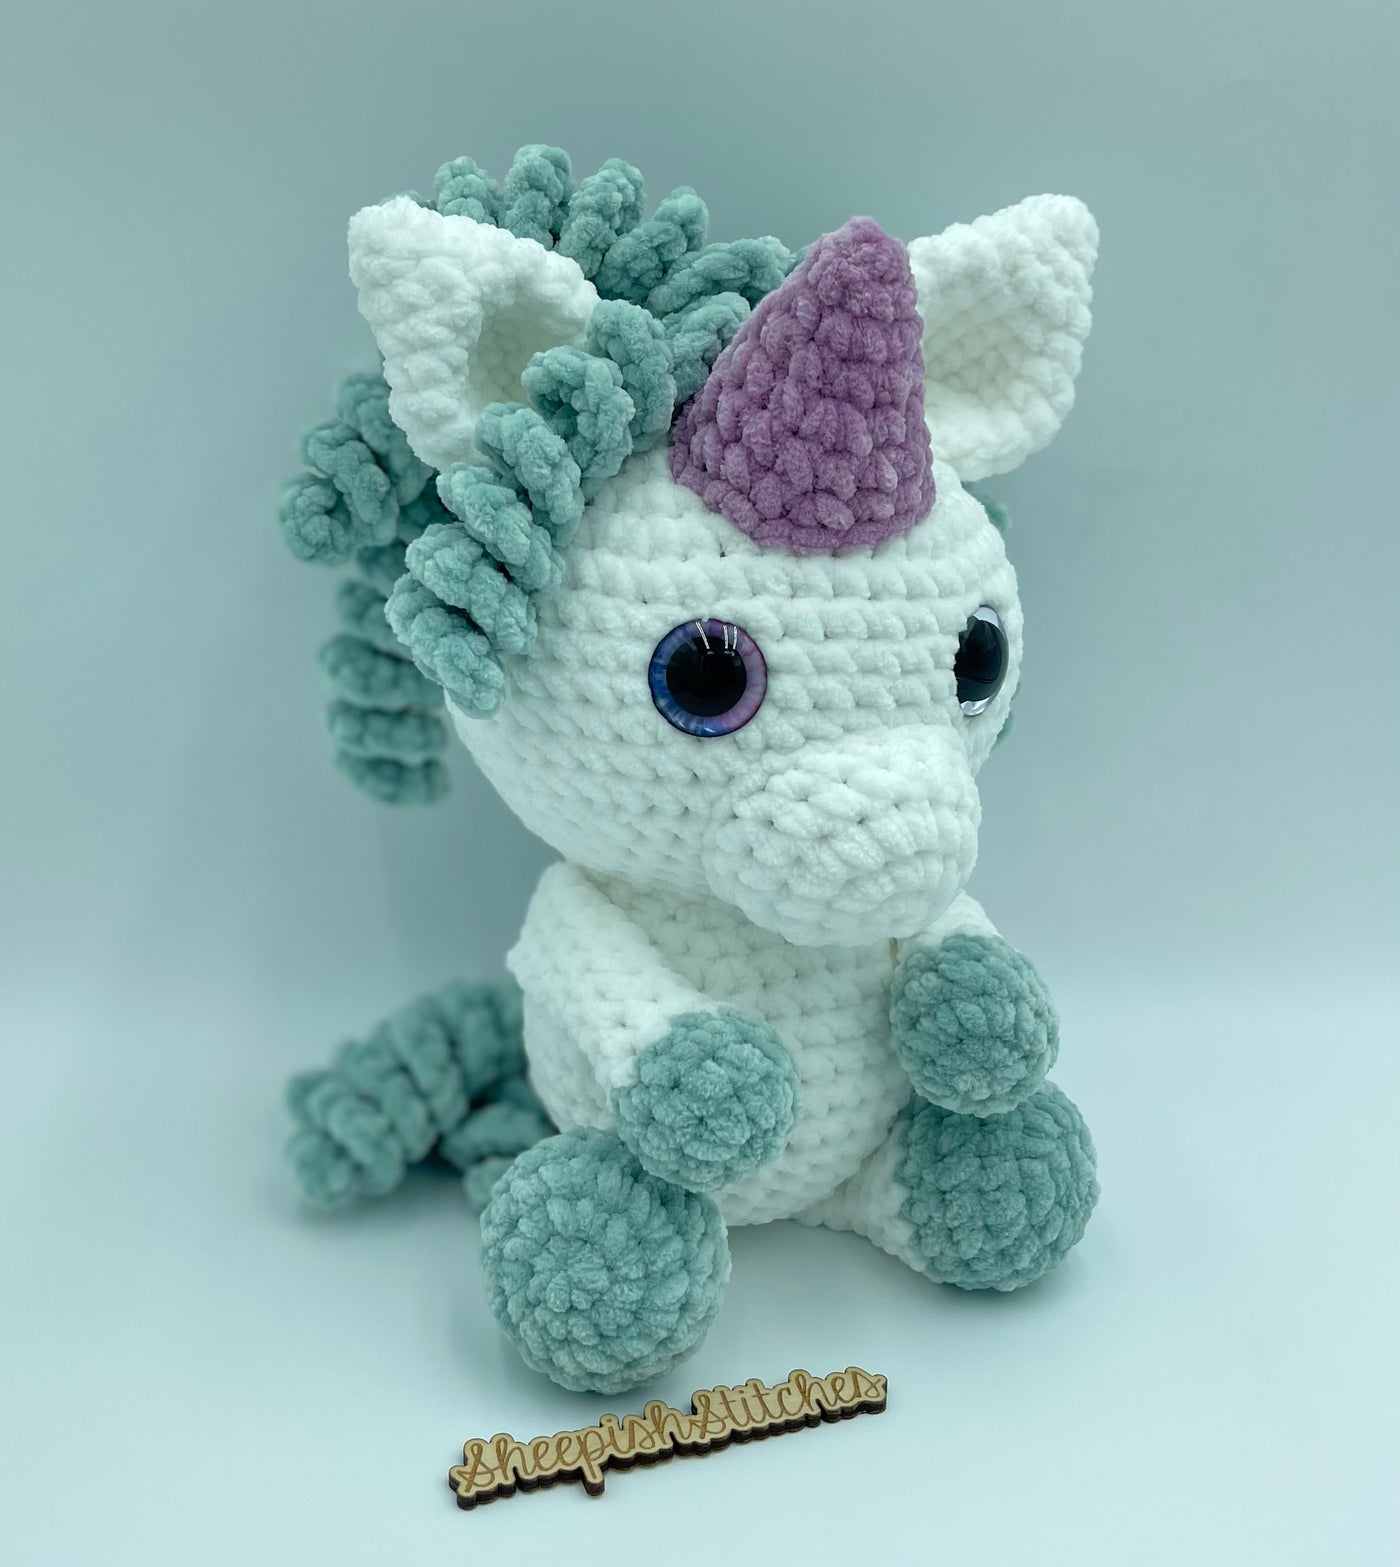 Unicorn - hand crocheted amigurumi unicorn by Sheepish Stitches